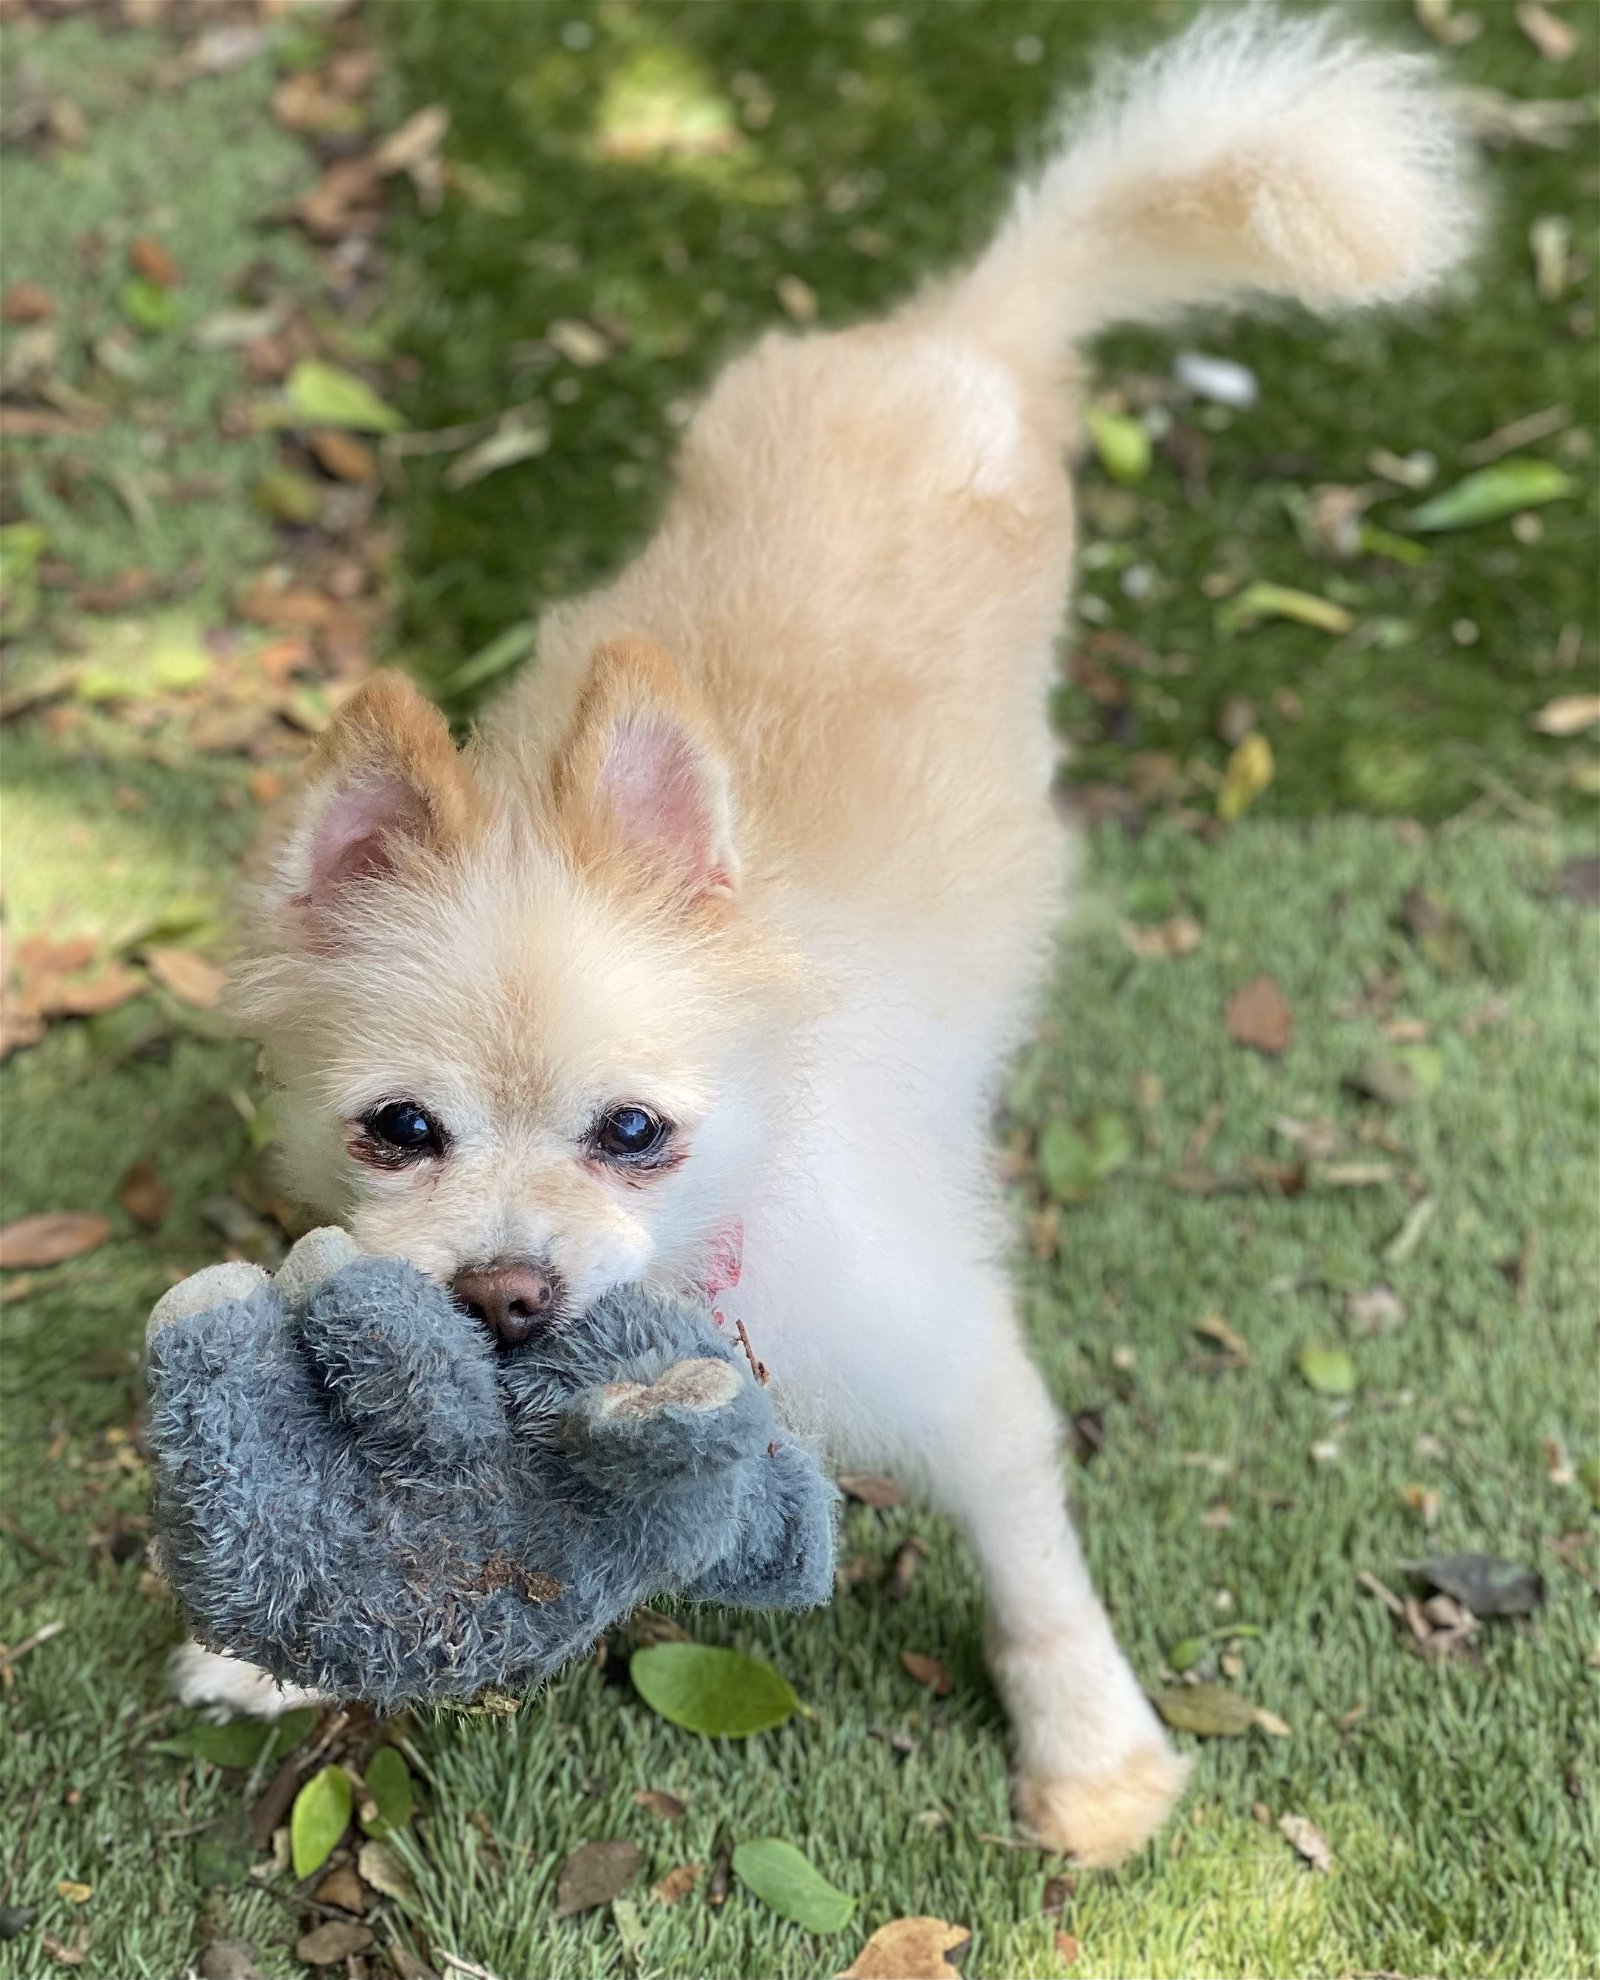 Keeper, an adoptable Pomeranian in Garland, TX, 75040 | Photo Image 3